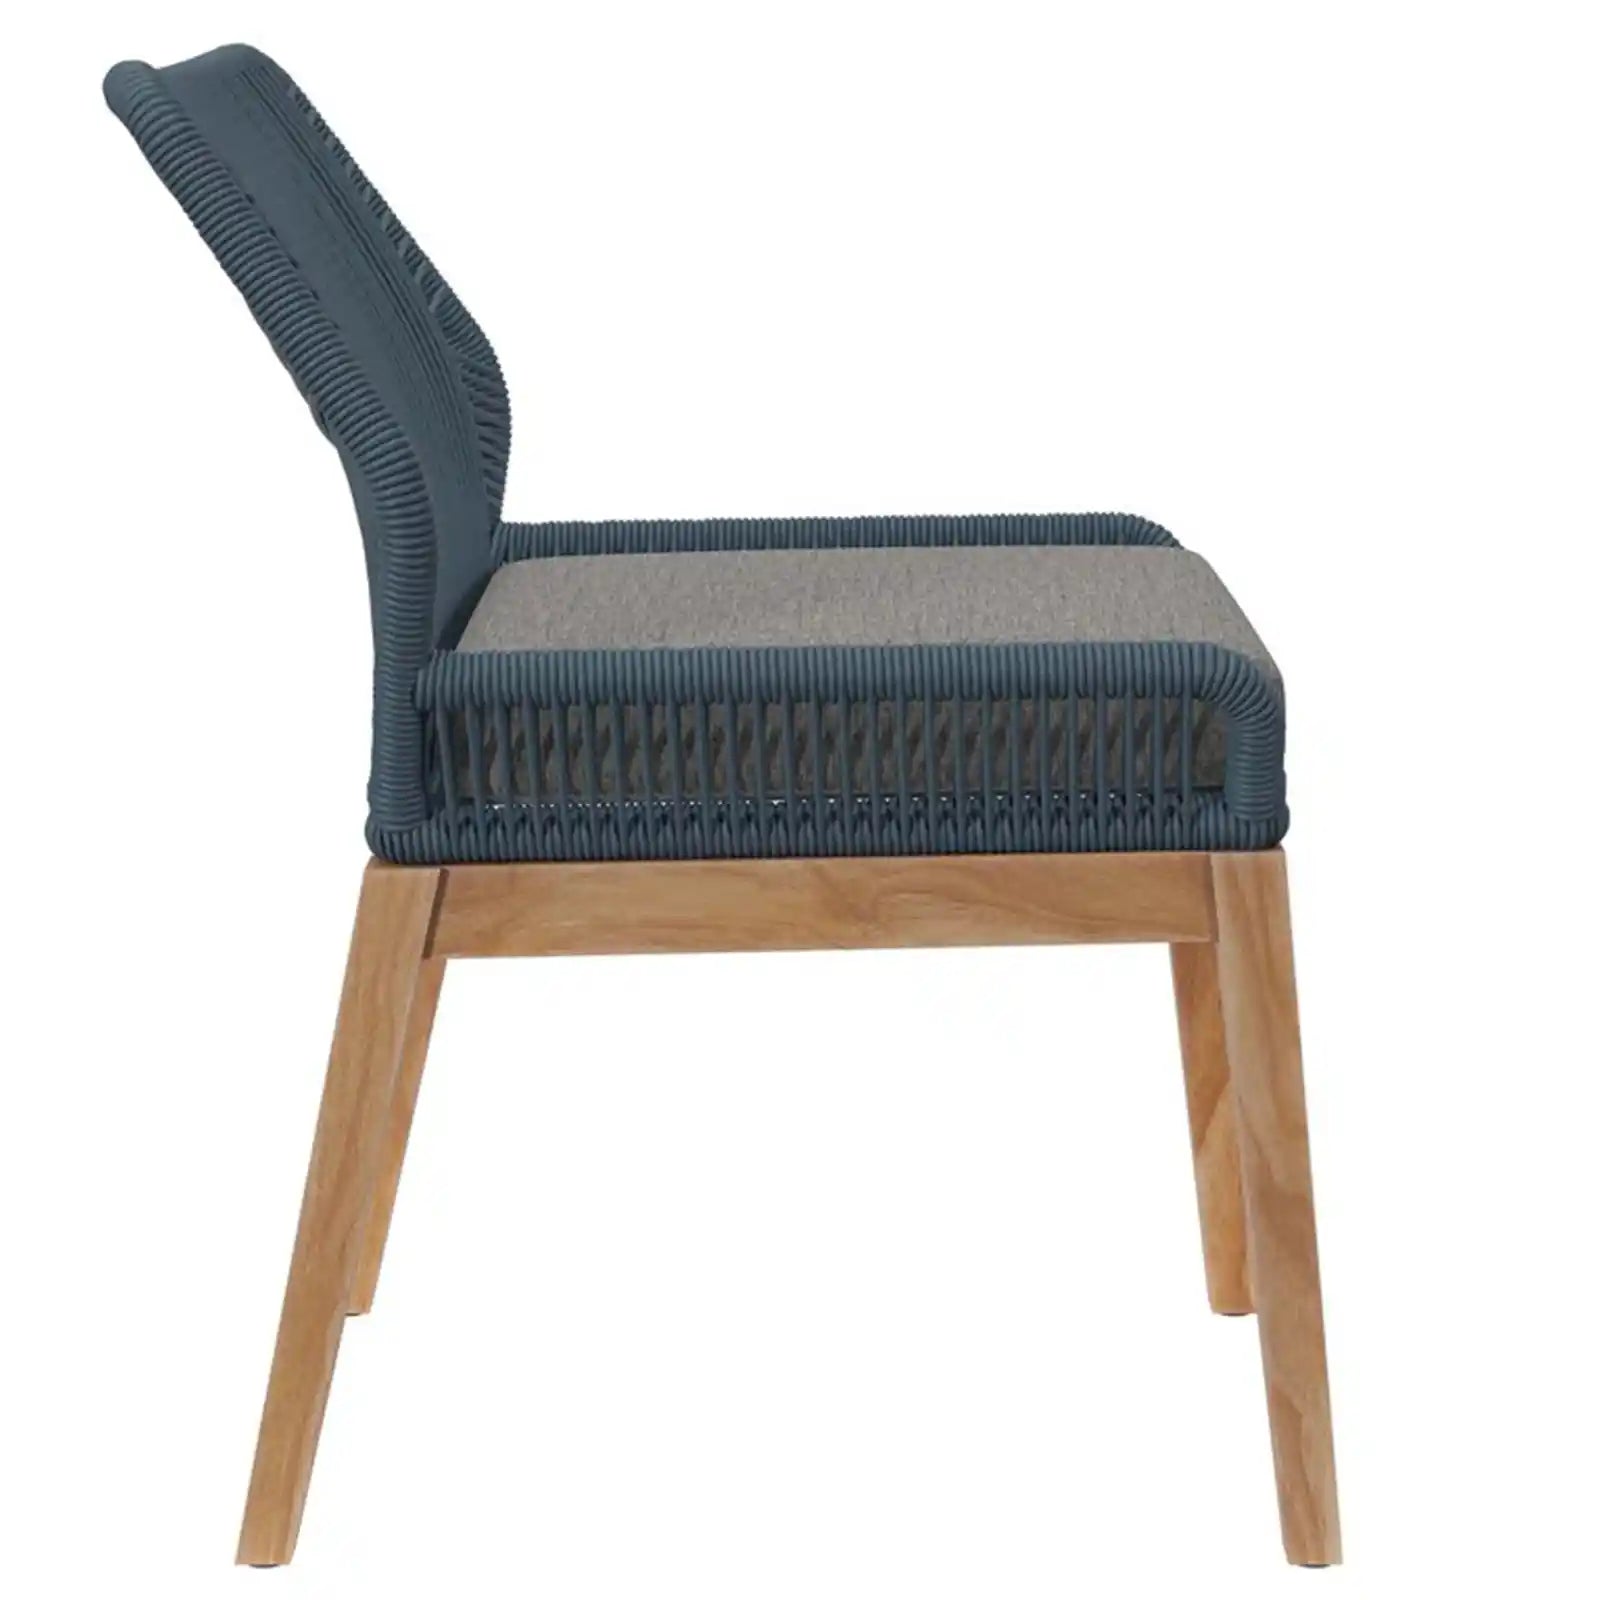 Indoor and Outdoor Patio Teak Wood Dining Chair